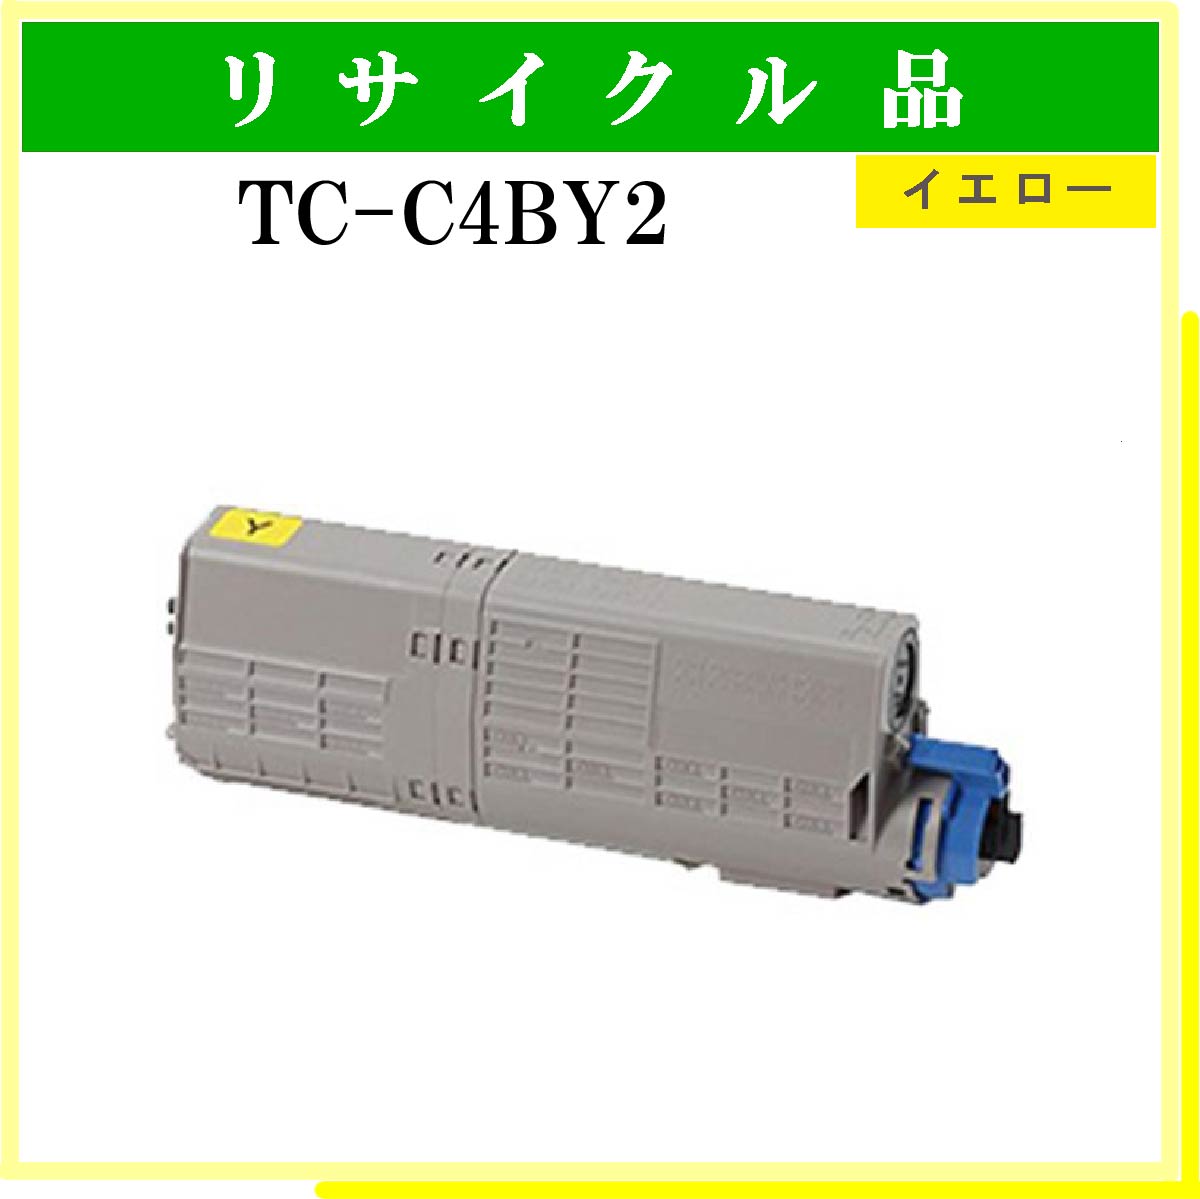 TC-C4BY2